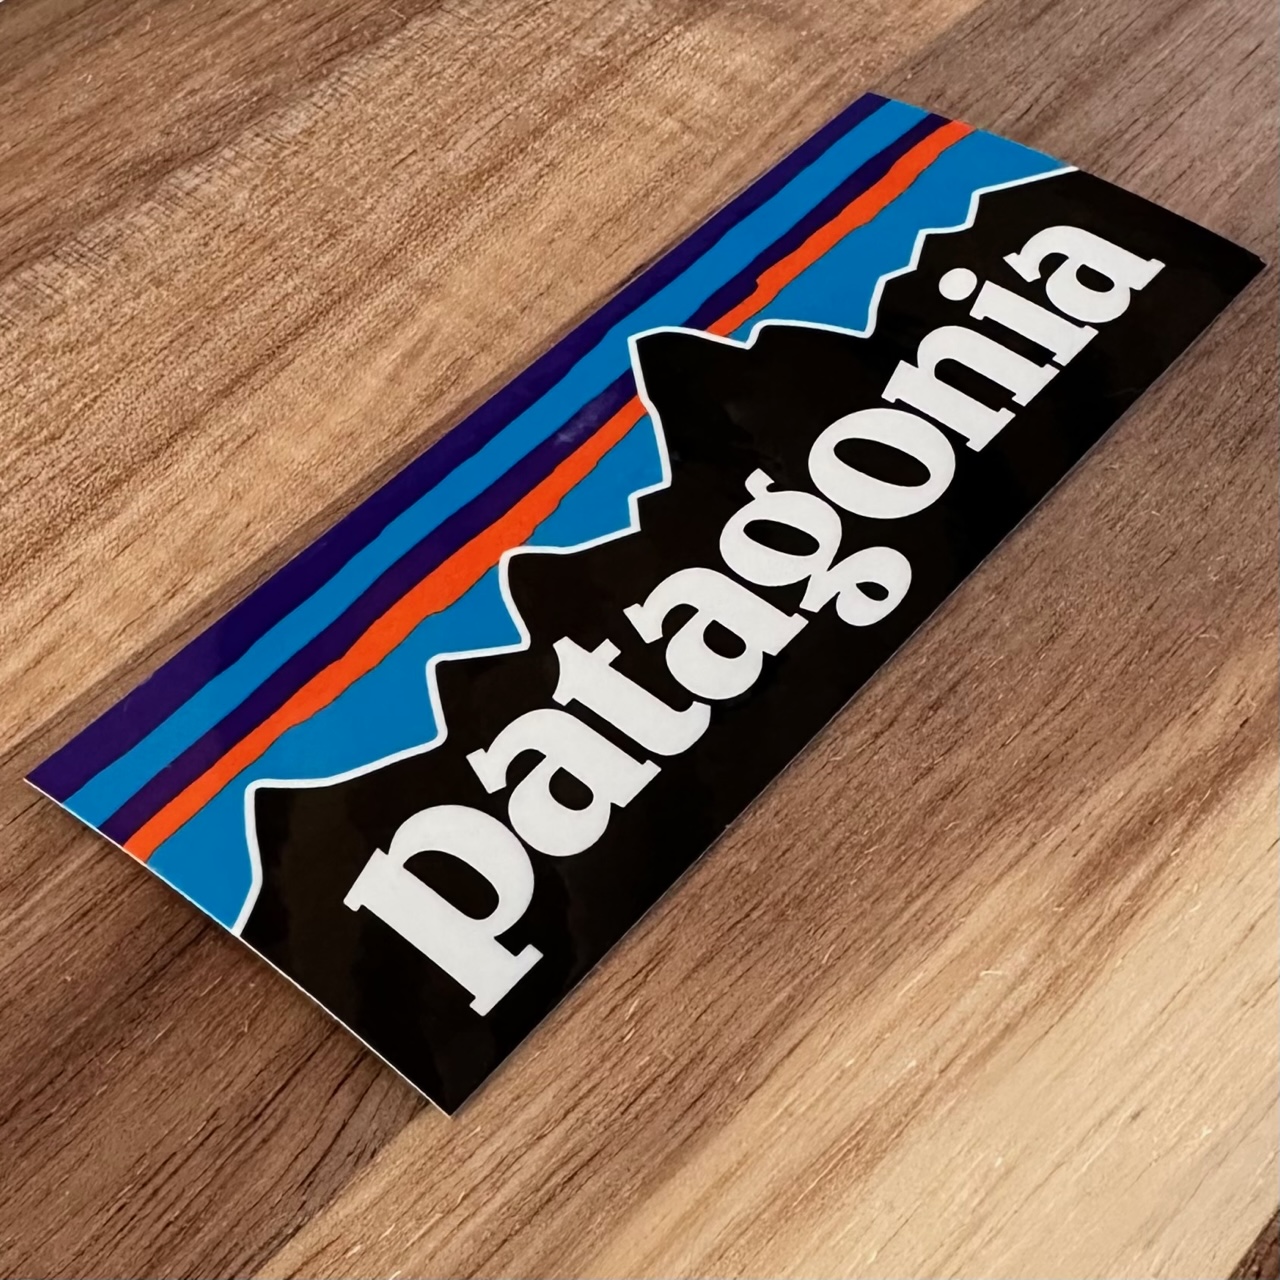 PATAGONIA STICKER Patagonia стикер наклейка P-6 P6 уличный 